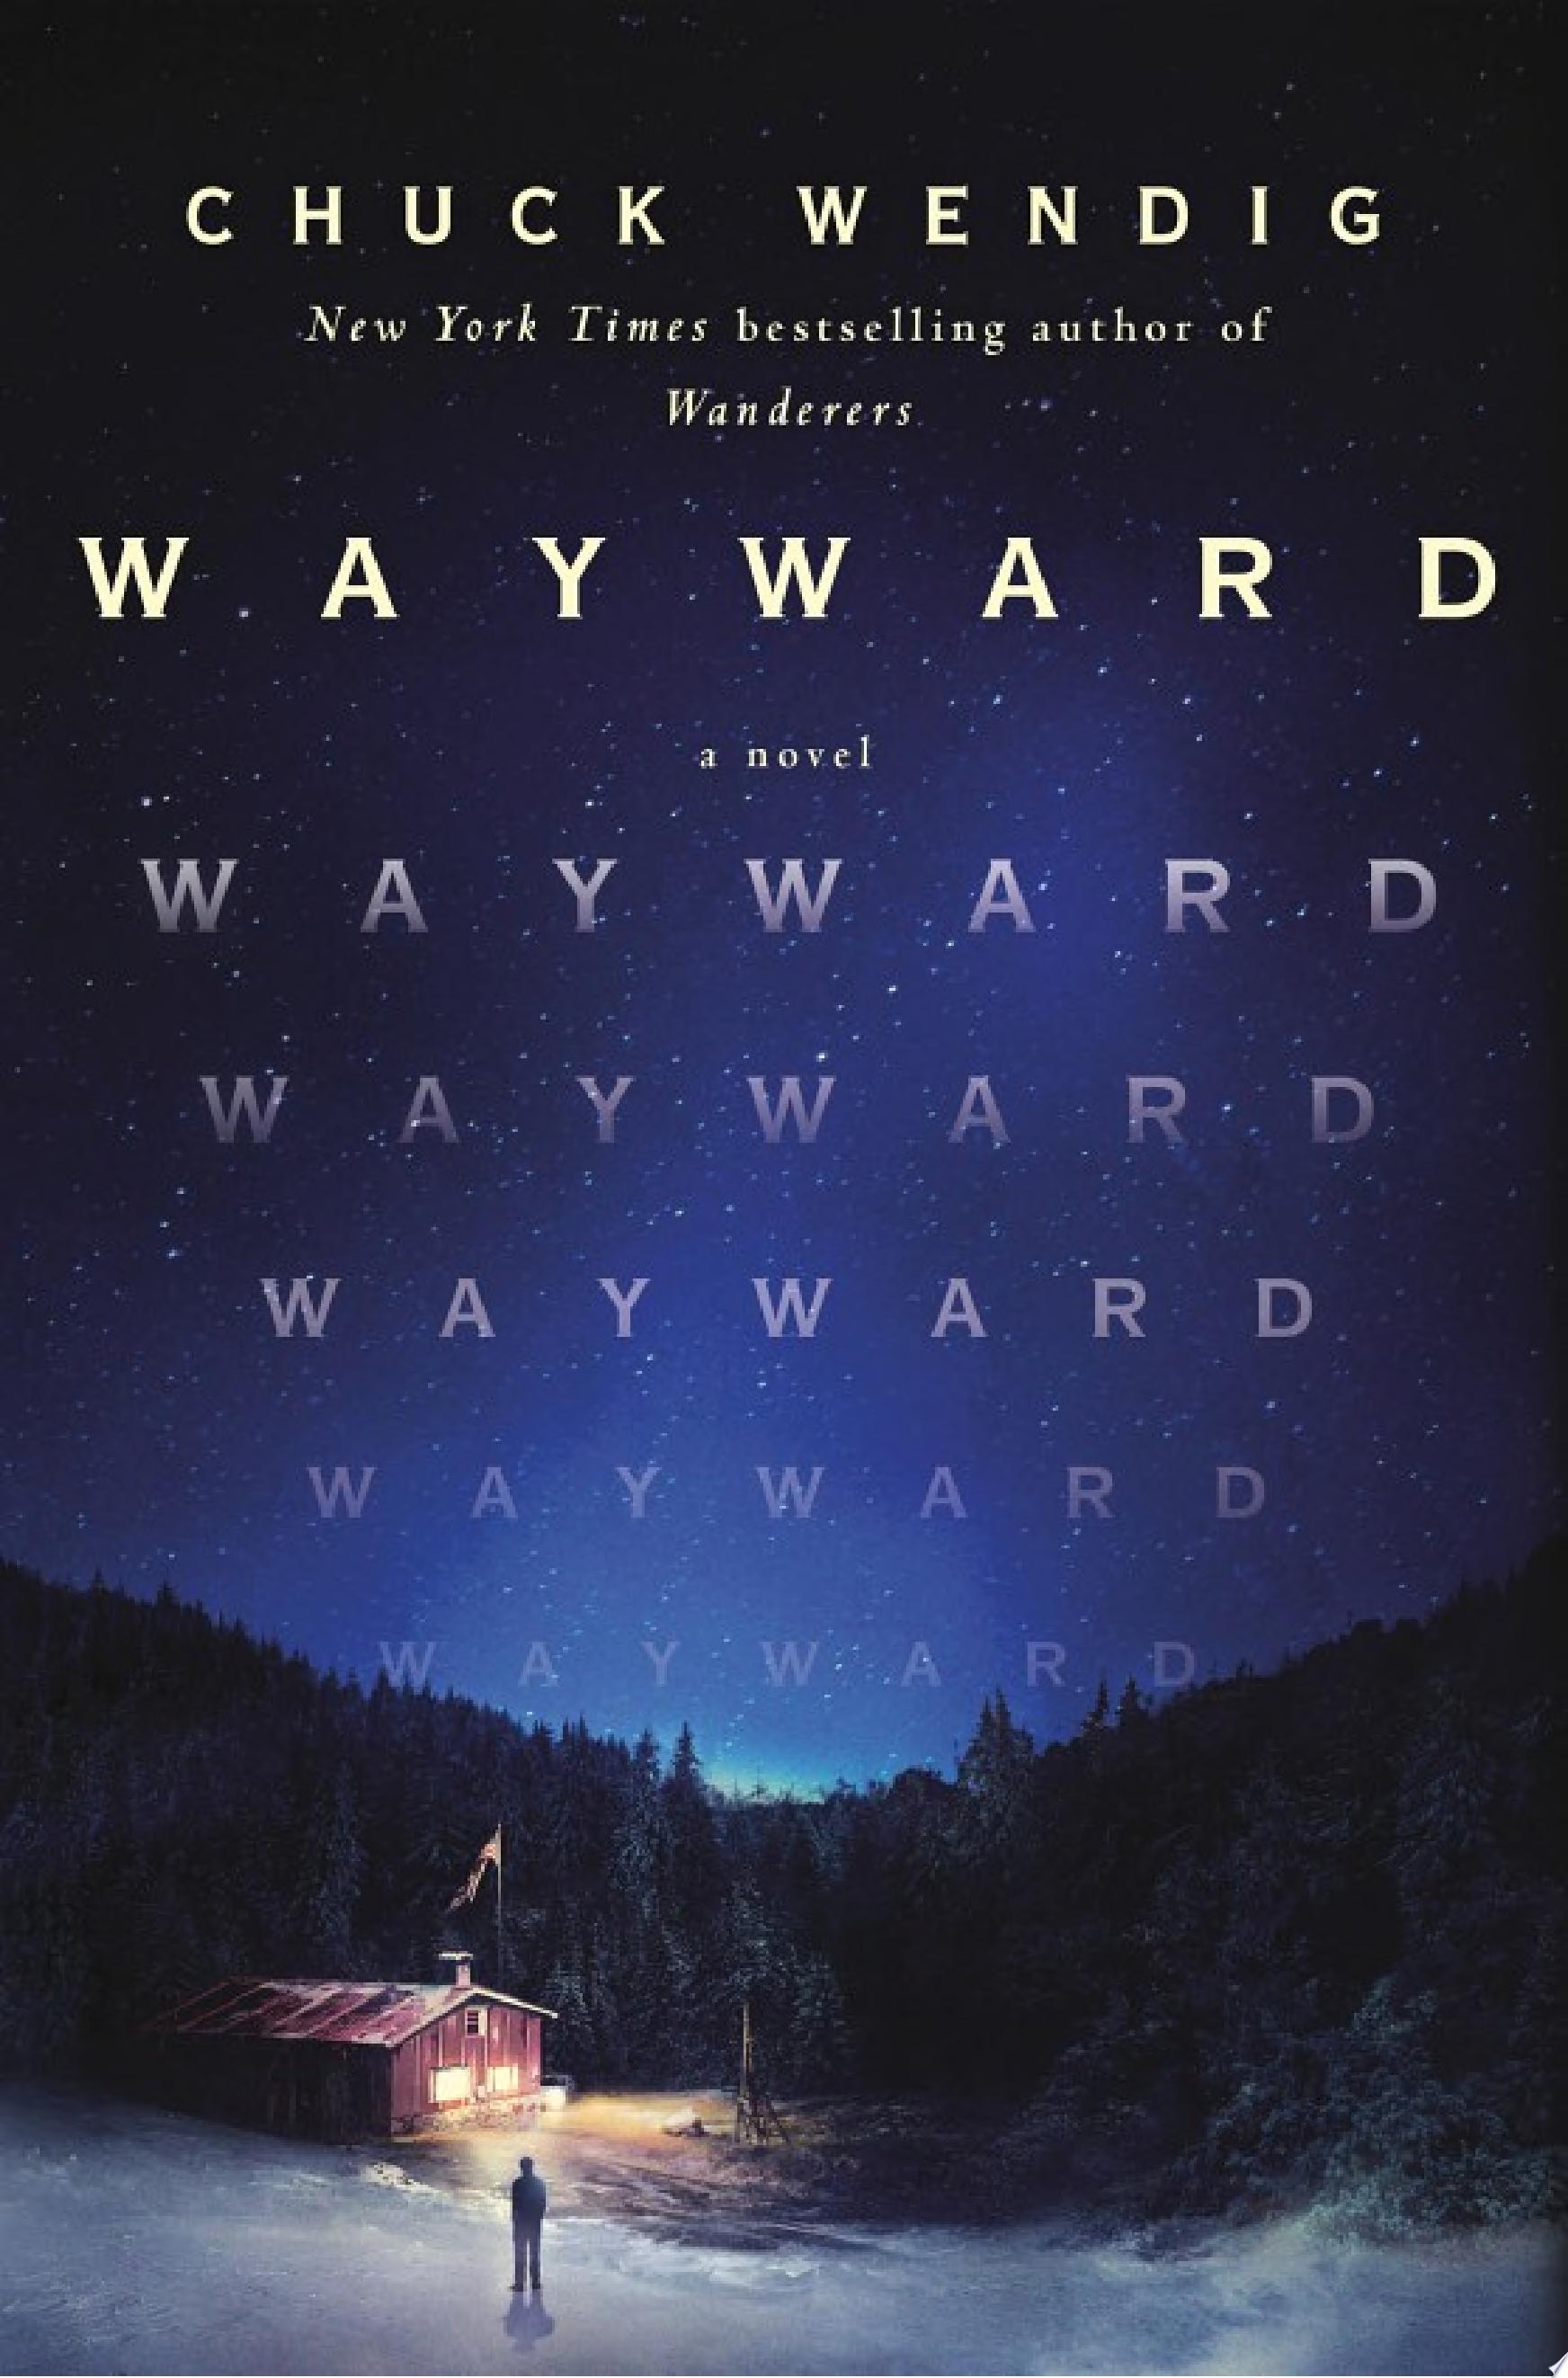 Image for "Wayward"